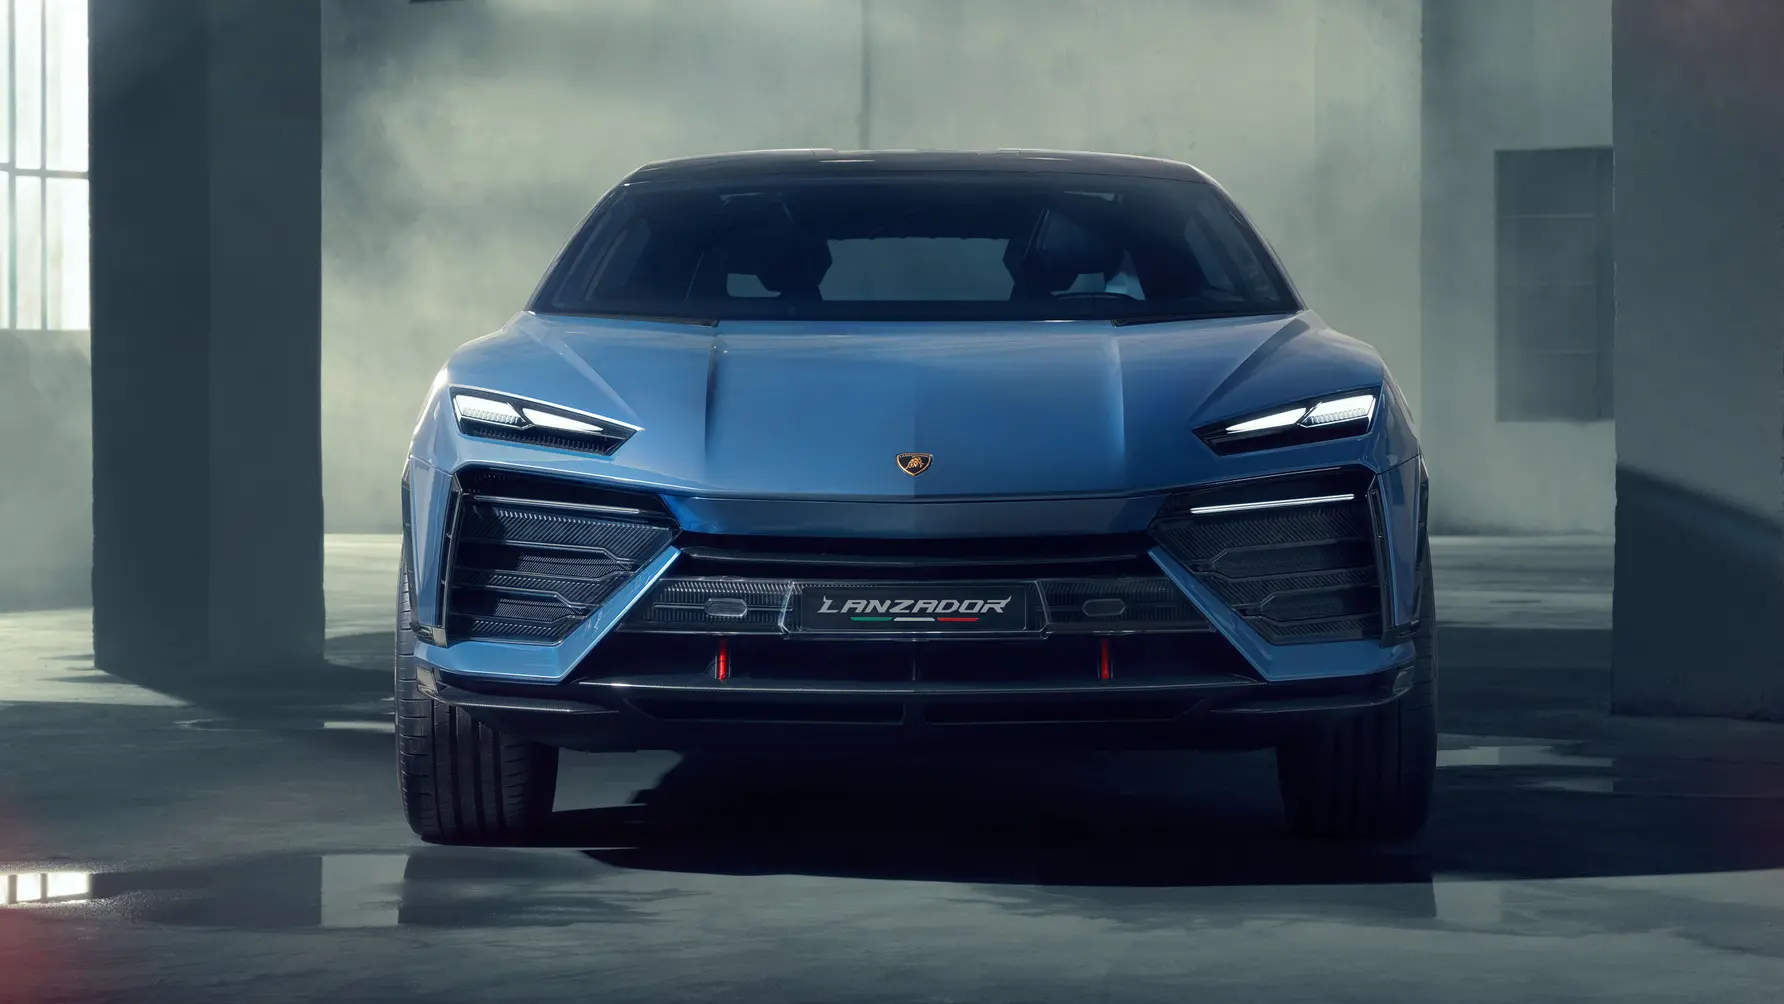 Meet the brand new Lamborghini Lanzador